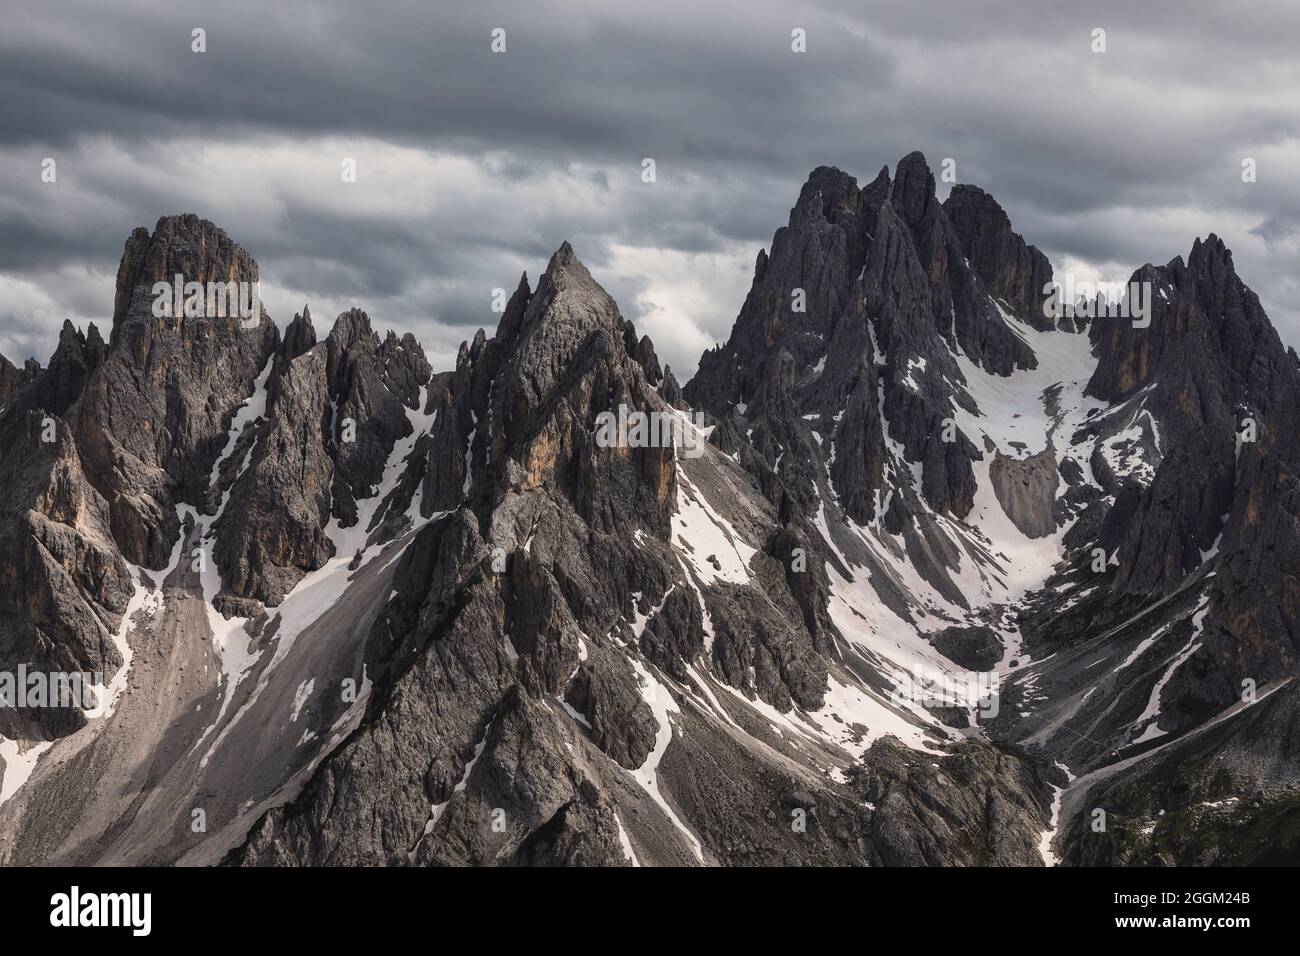 Fadini di Misurina a rugged mountain range in the Dolomites. Stock Photo